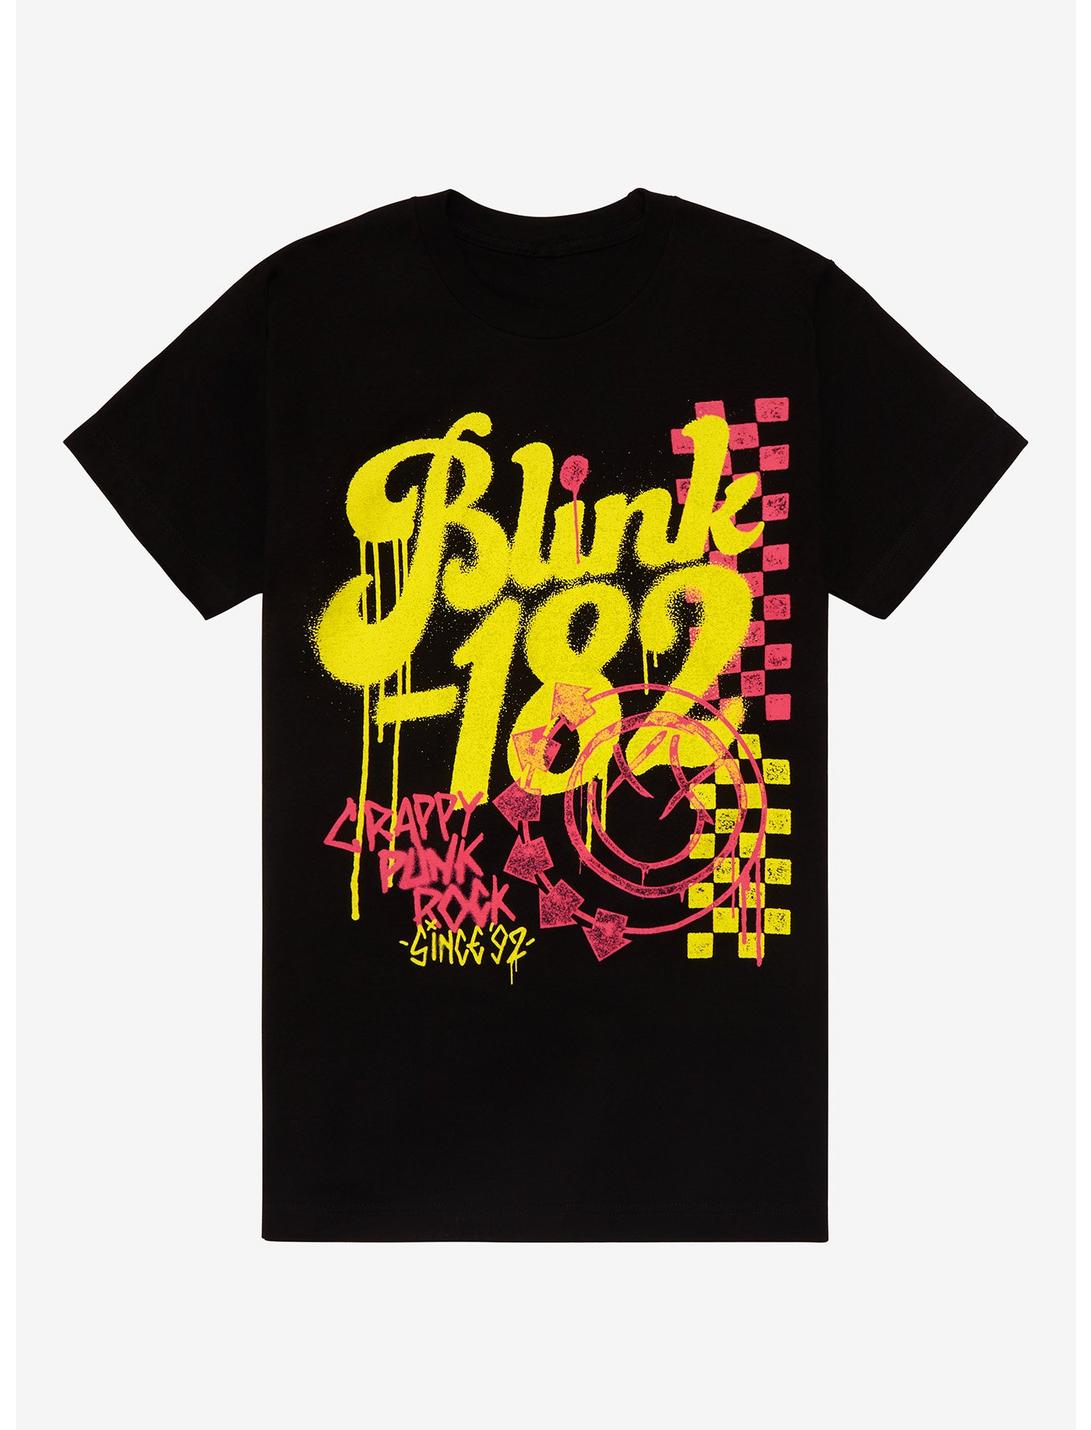 Blink-182 Crappy Punk Rock Graffiti Boyfriend Fit Girls T-Shirt, BLACK, hi-res